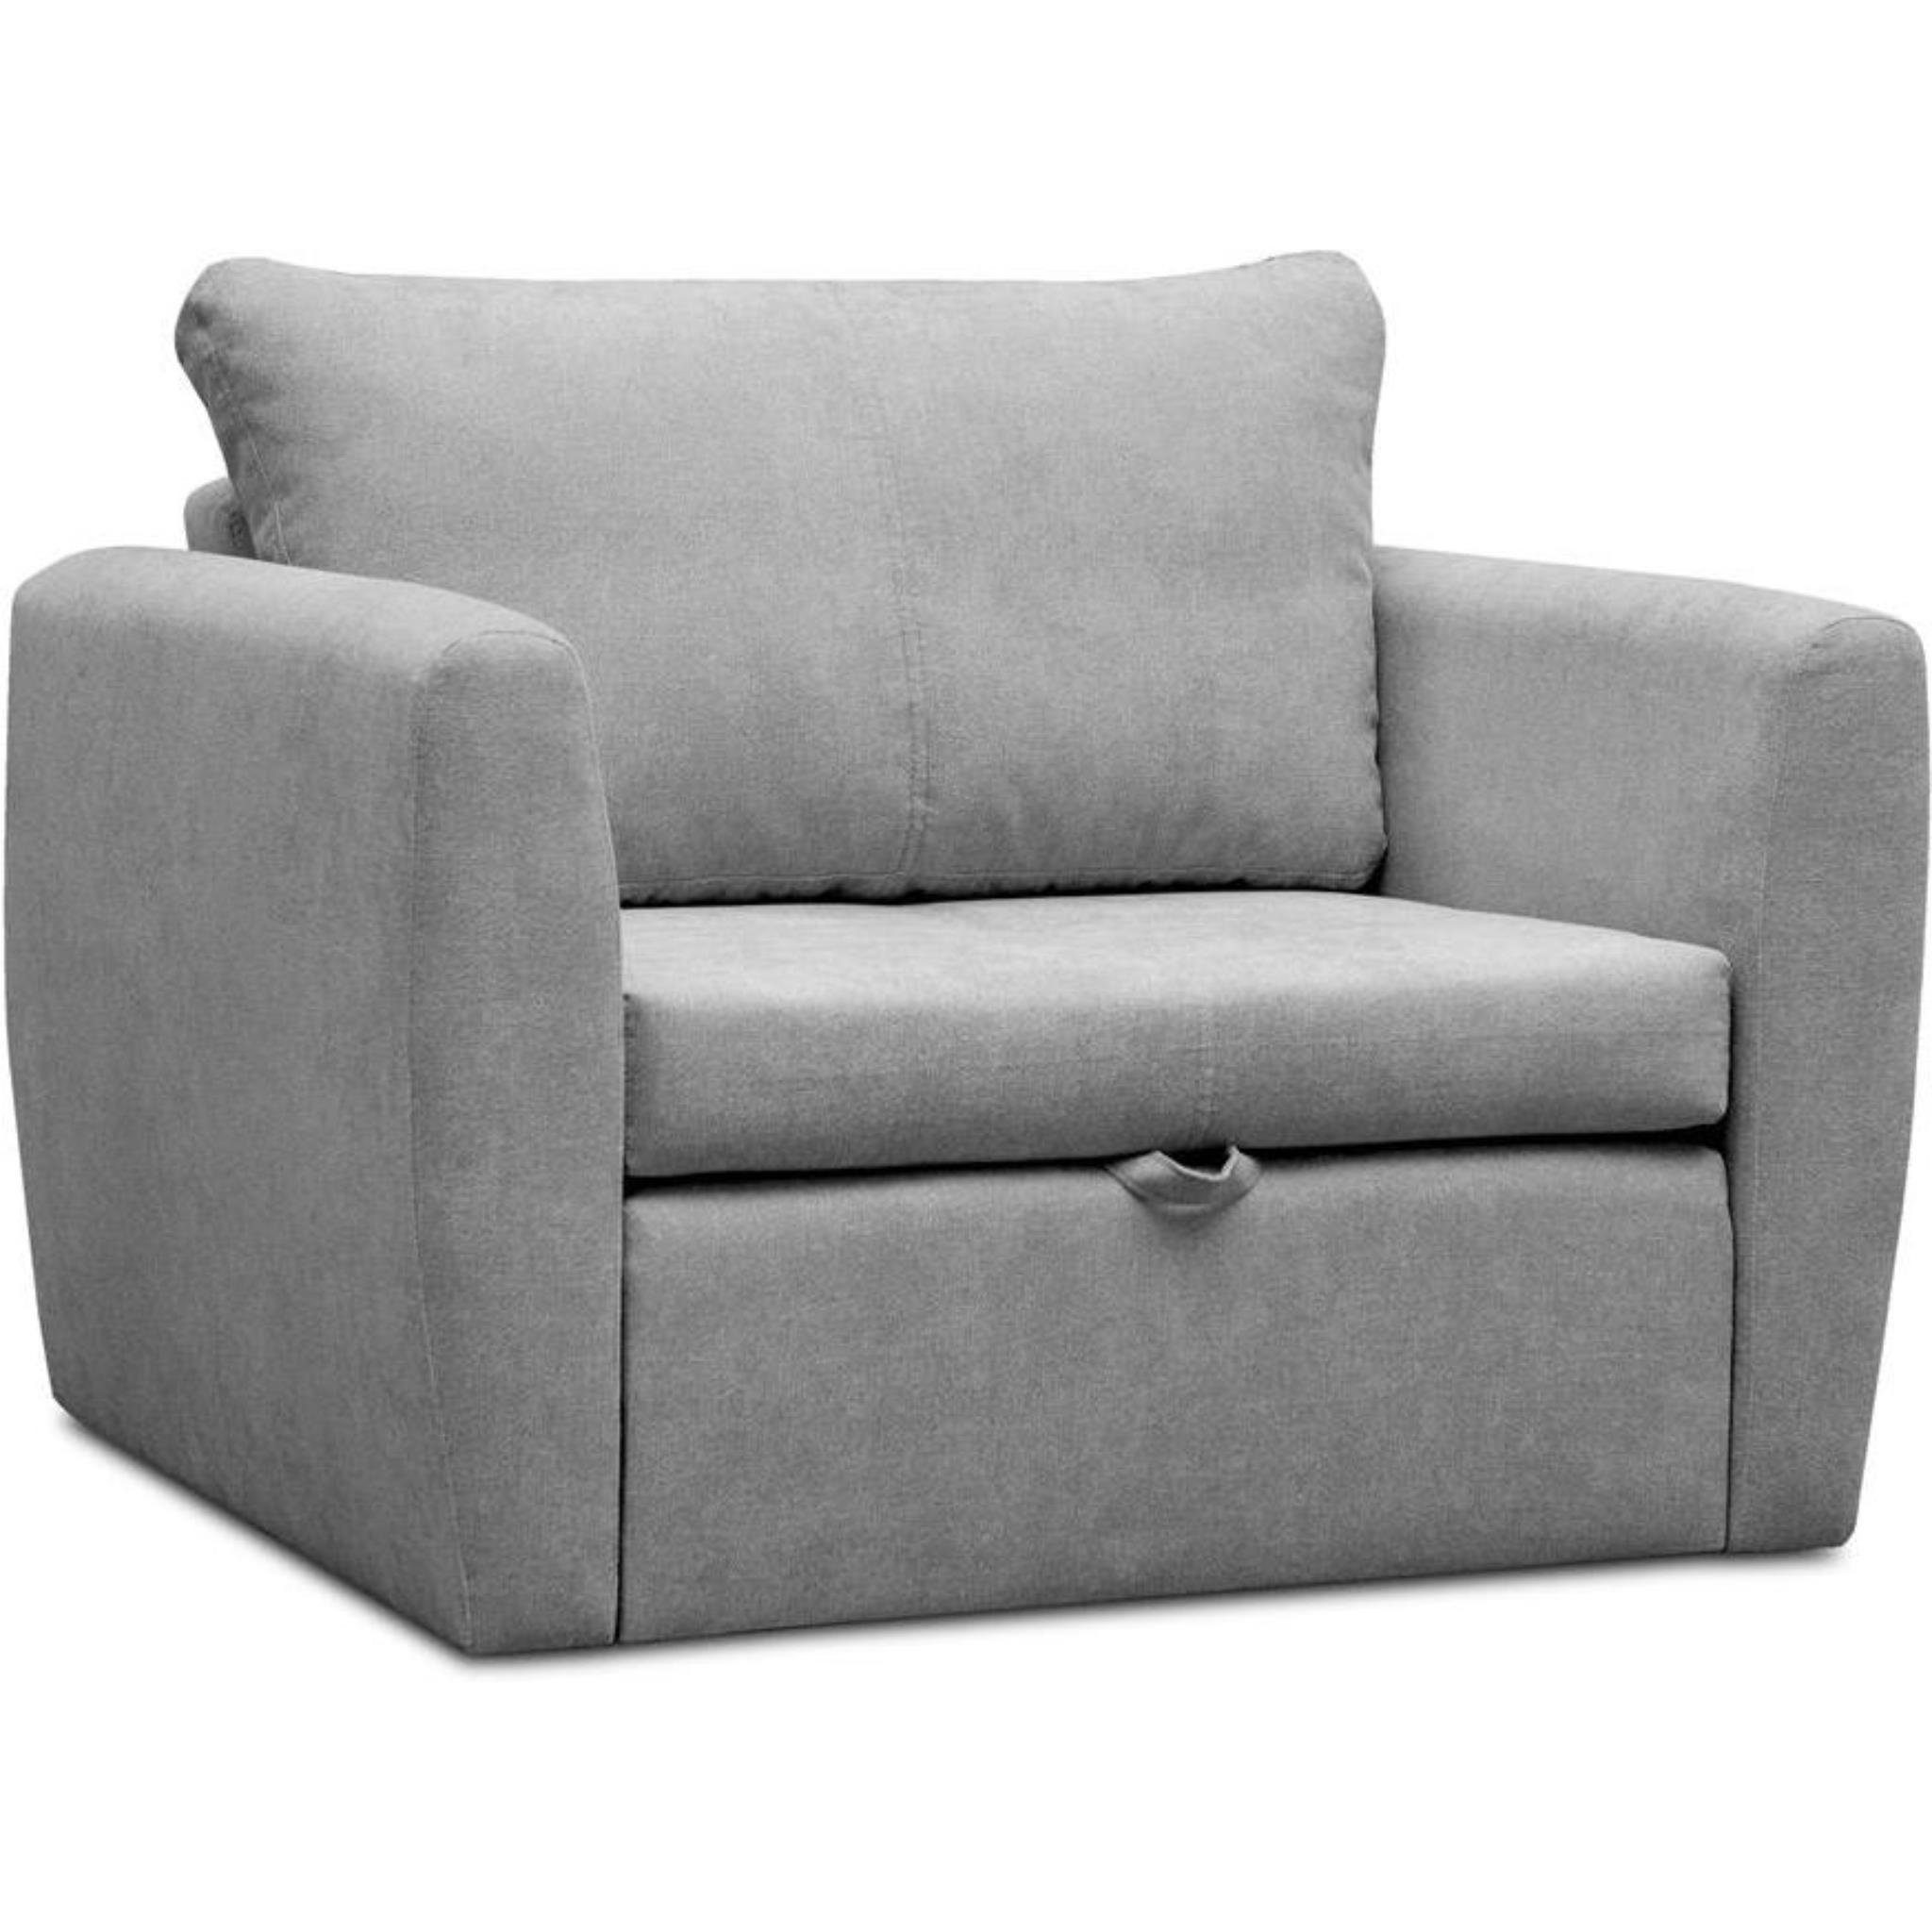 1-Sitzer Polstersessel (Modern Bettkasten, Schlaffunktion, Relaxsessel Grau 50) Sofa, (alfa Beautysofa Kamel Wohnzimmersessel), mit